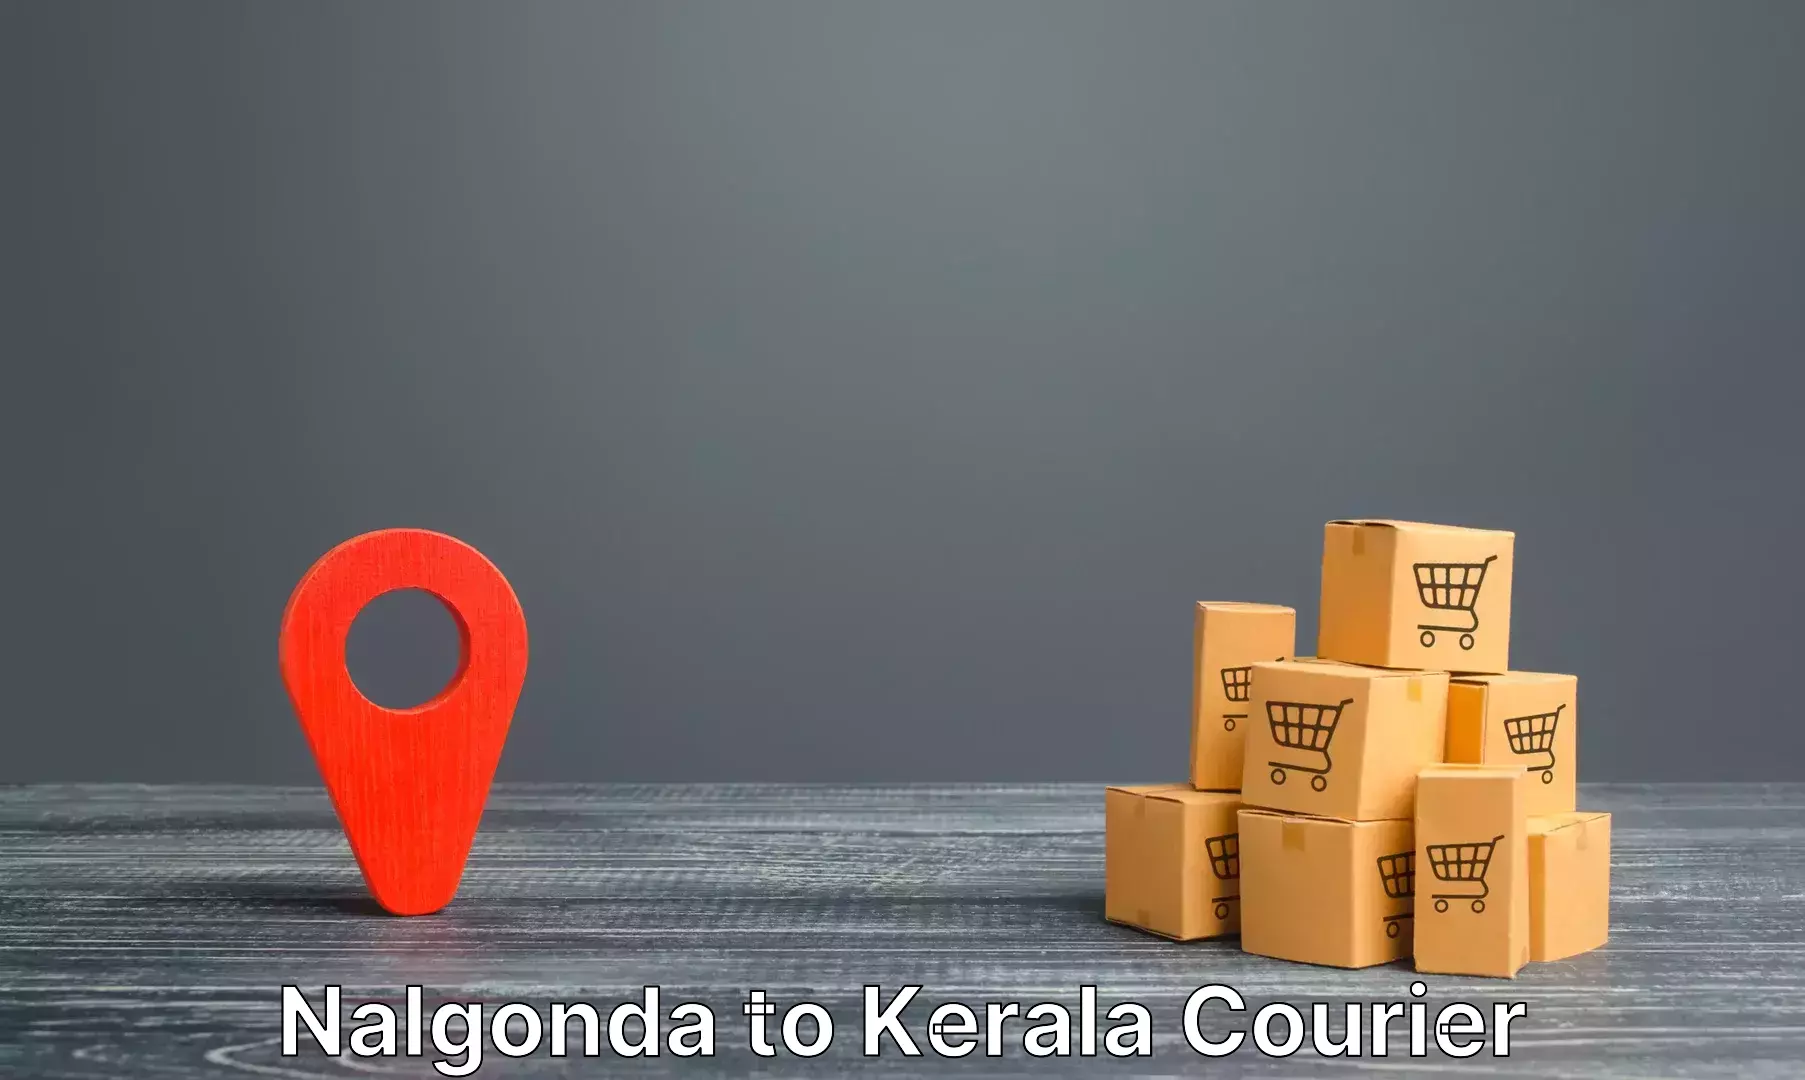 Luggage delivery app Nalgonda to Kochi